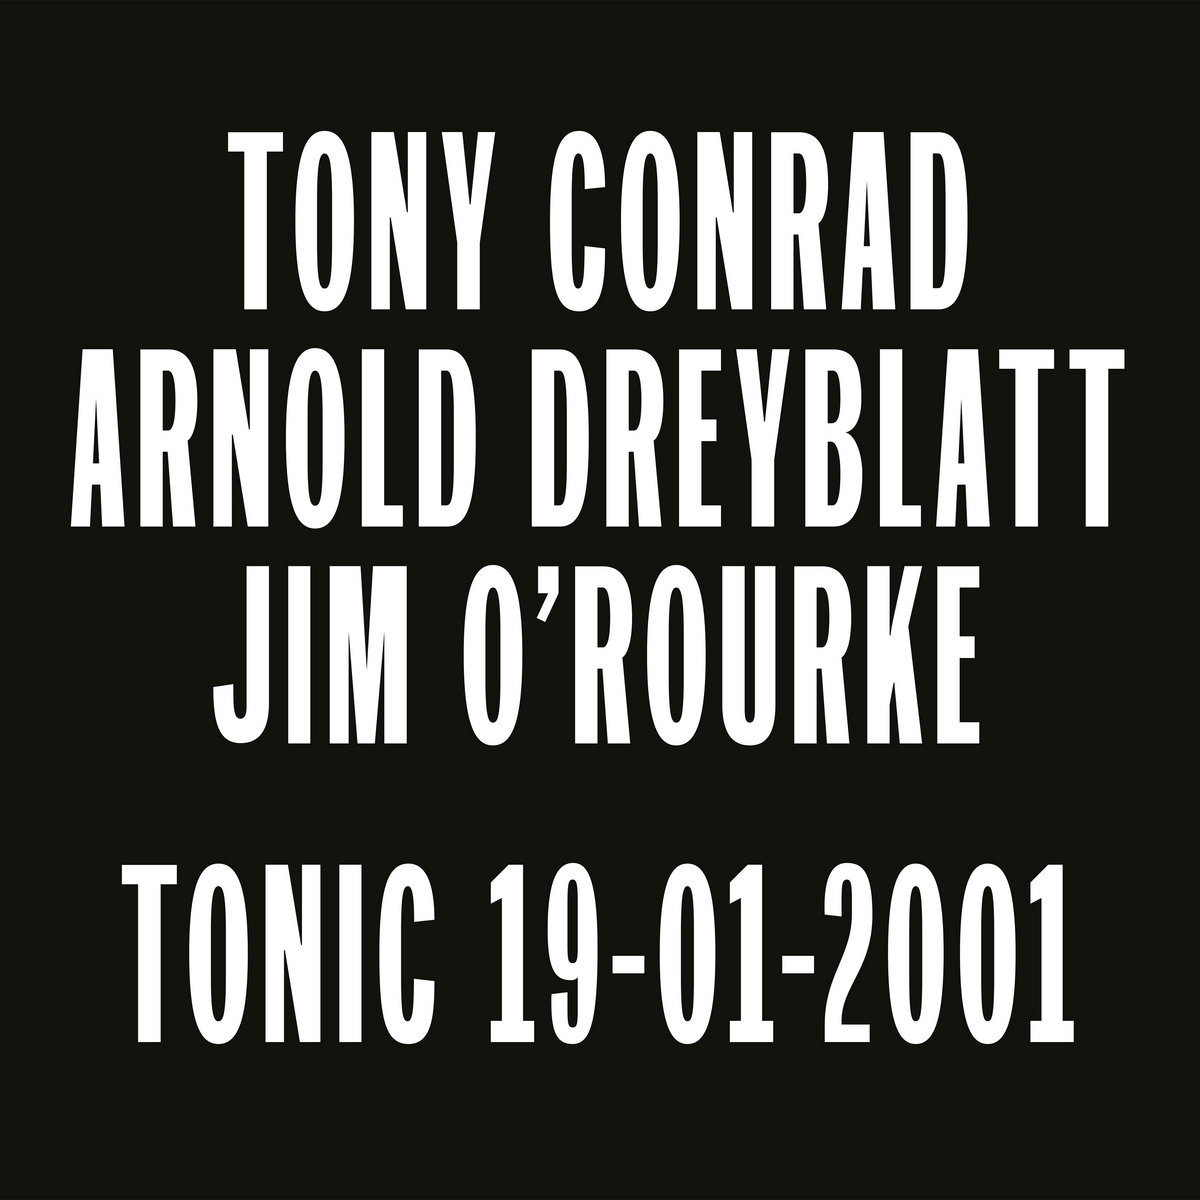 Tonic 19-01-2001 